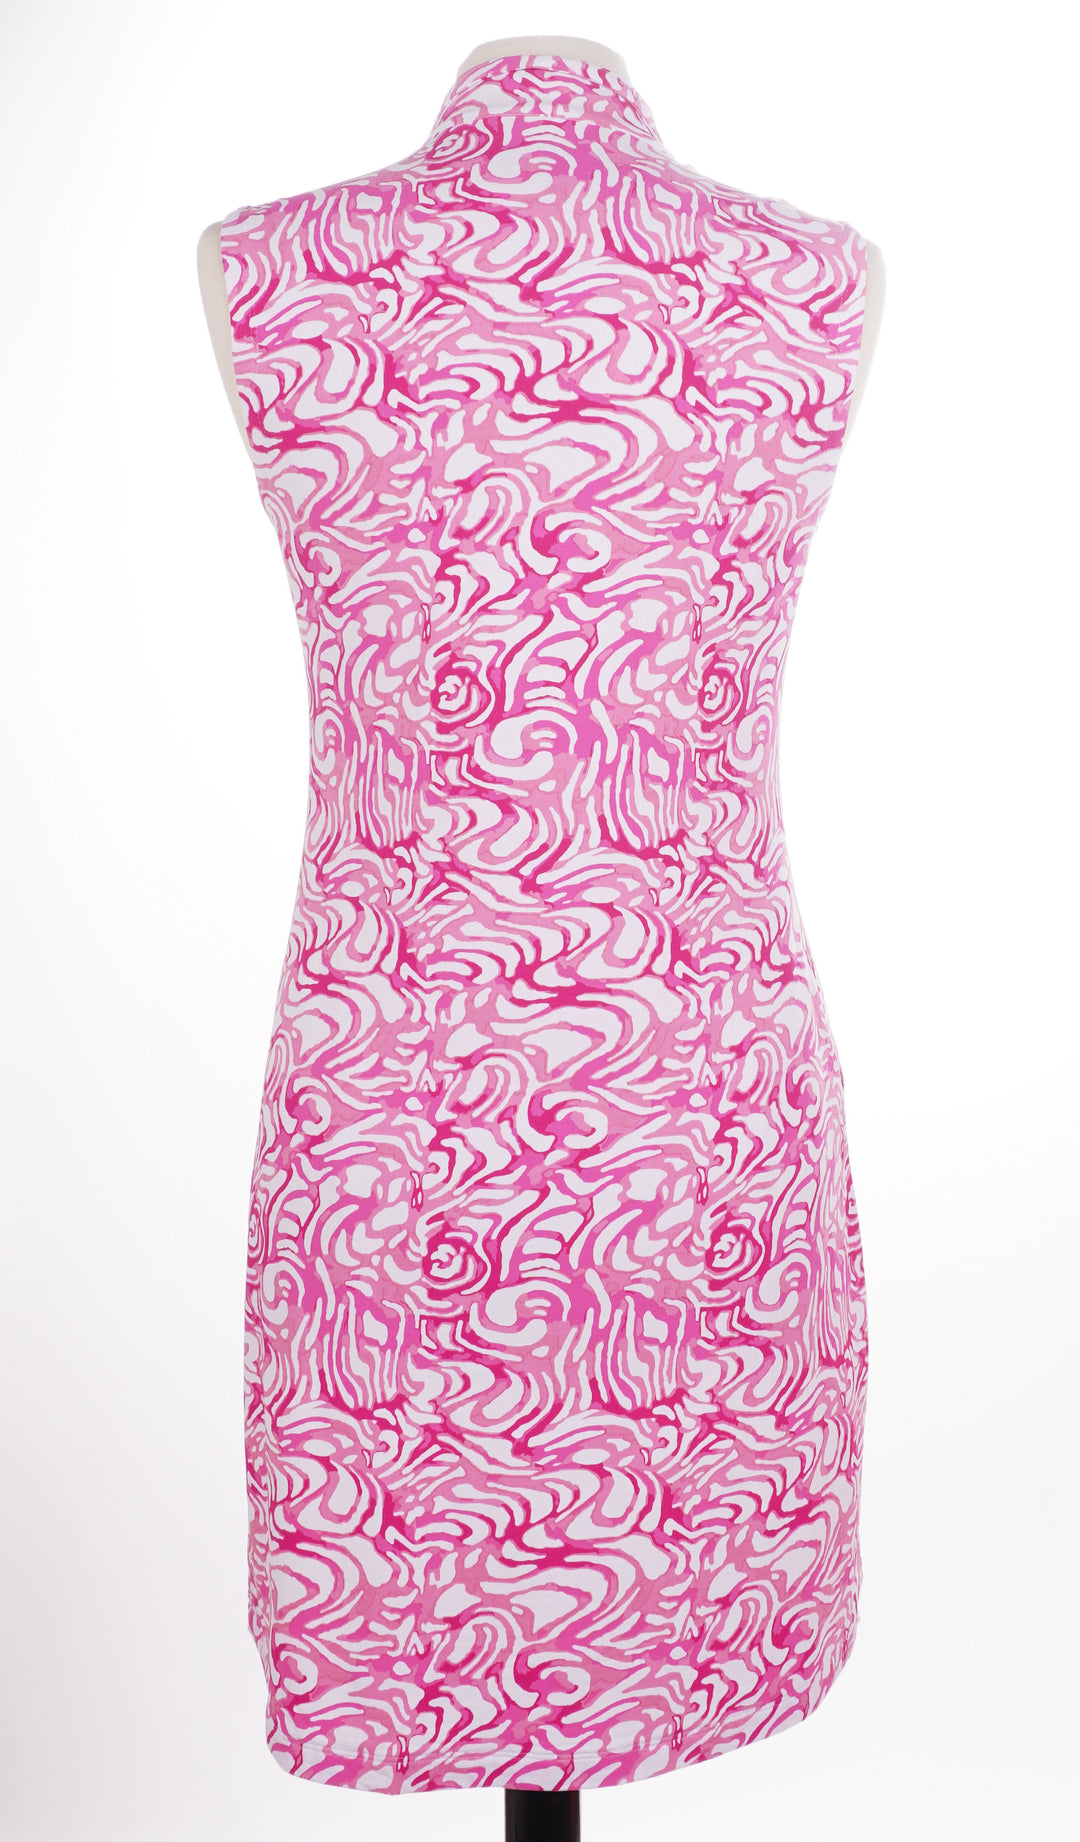 IBKUL Kinsley Print Sleeveless Dress - Size Small - Skorzie